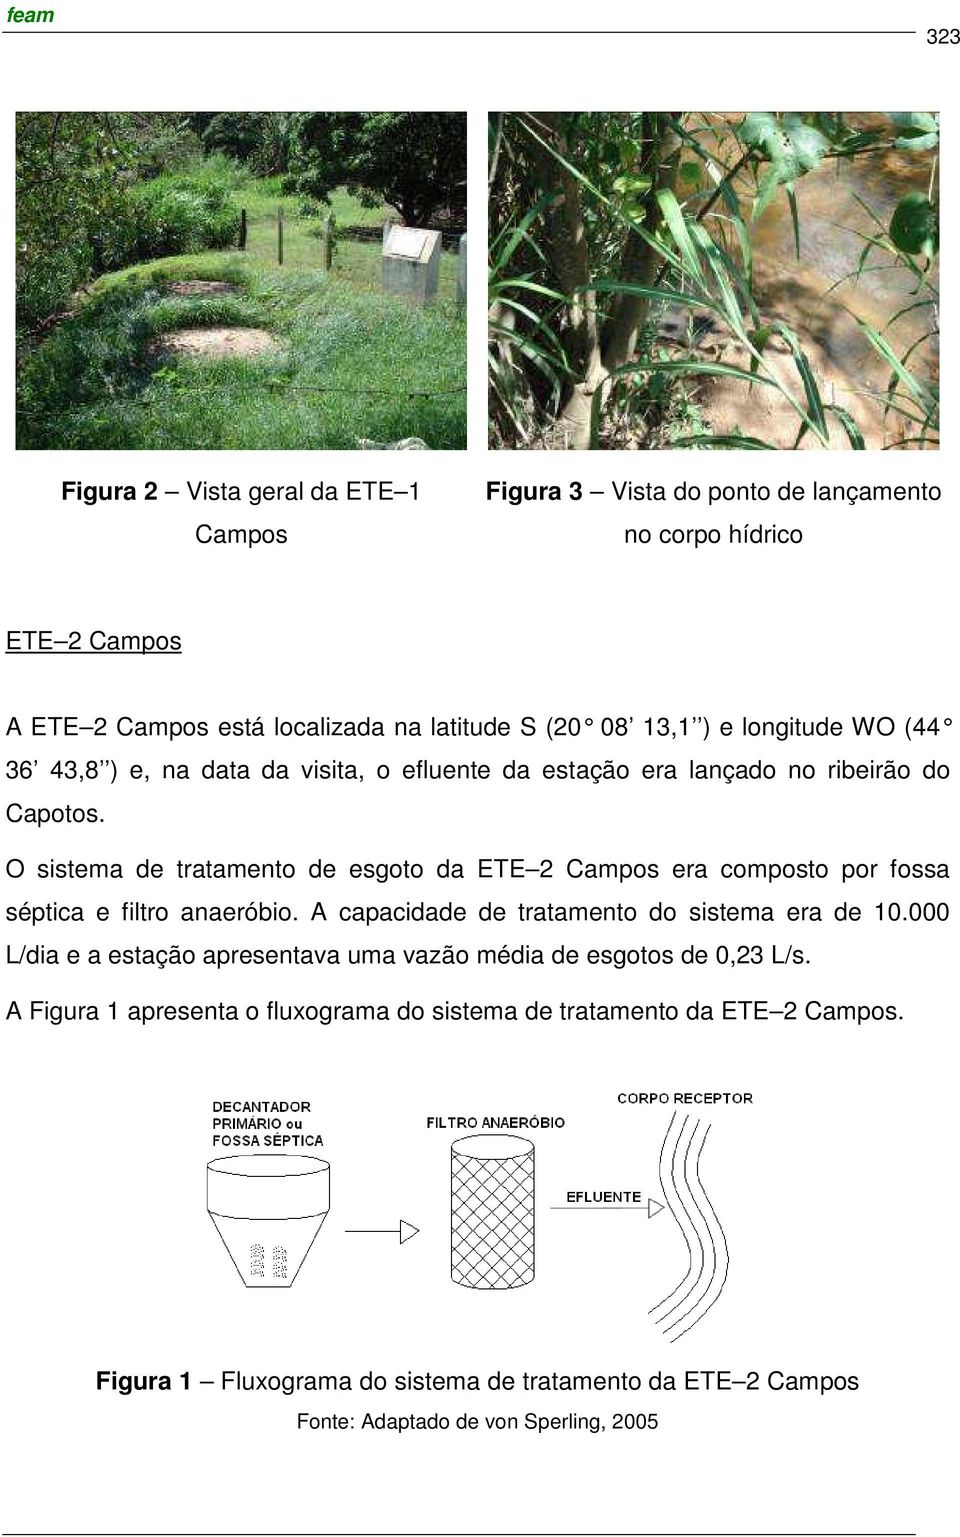 O sistema de tratamento de esgoto da ETE 2 Campos era composto por fossa séptica e filtro anaeróbio. A capacidade de tratamento do sistema era de 10.